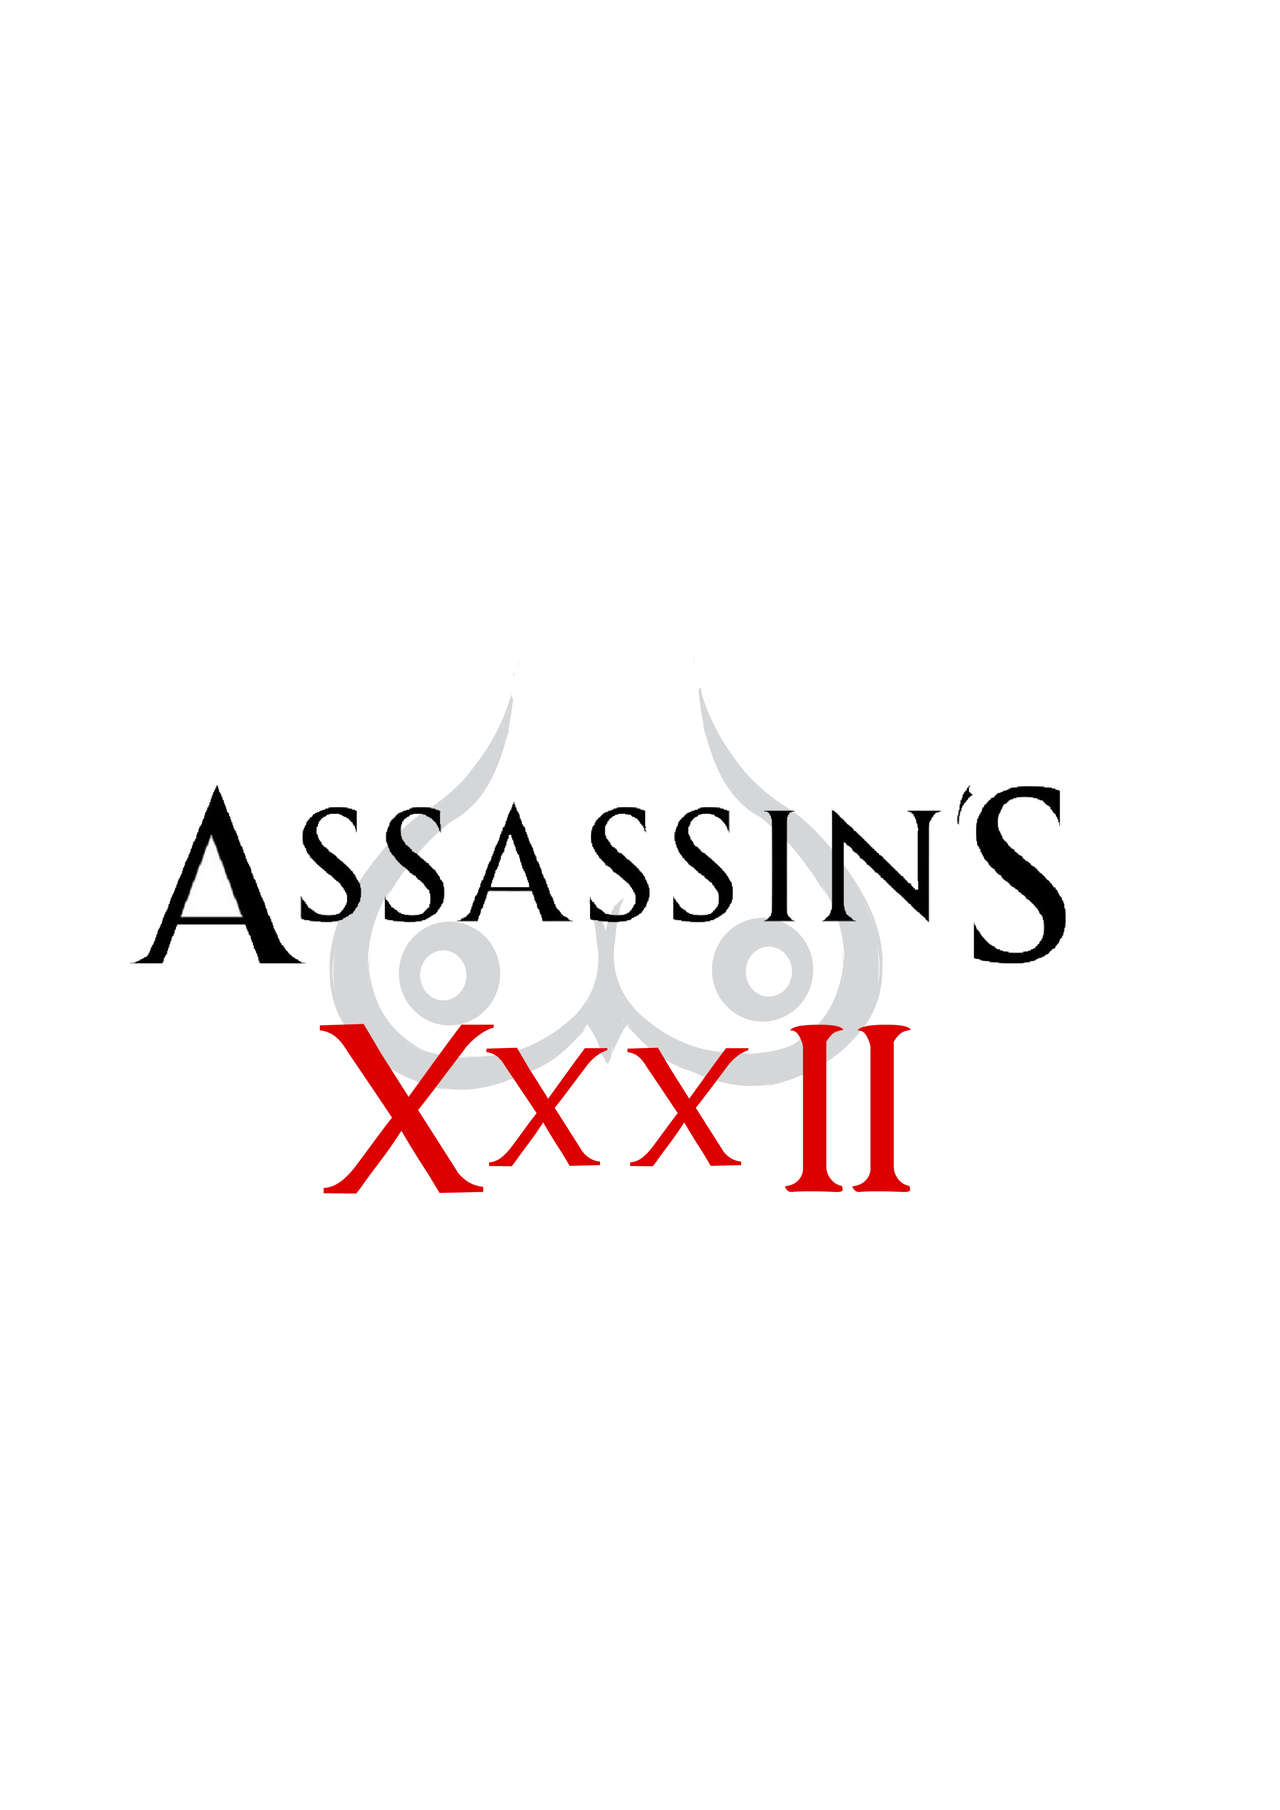 Assassin’s XXX II 15